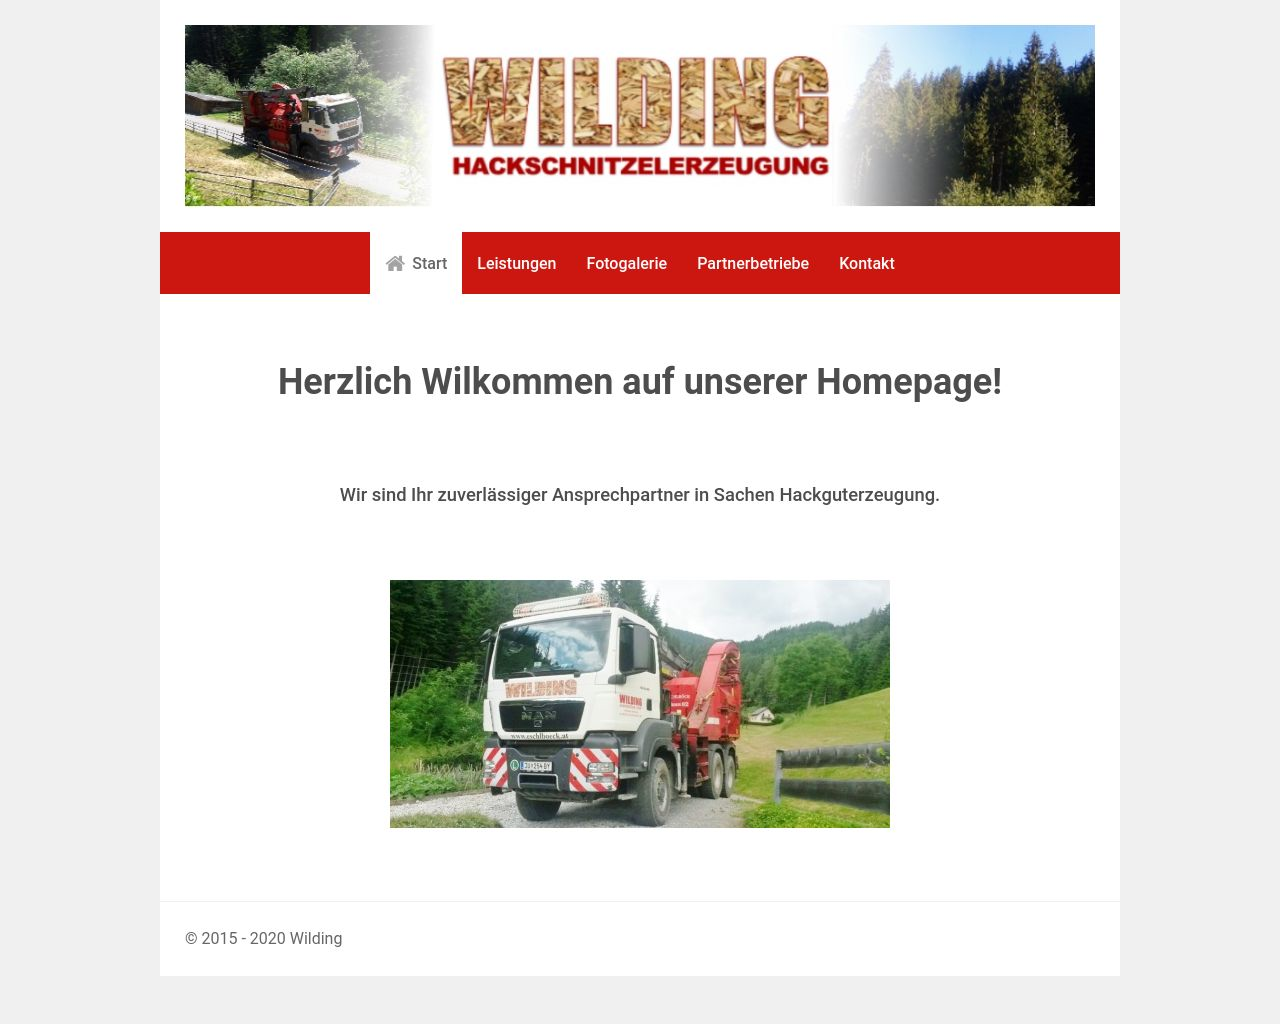 Bild Website hackschnitzelerzeugung.at in 1280x1024